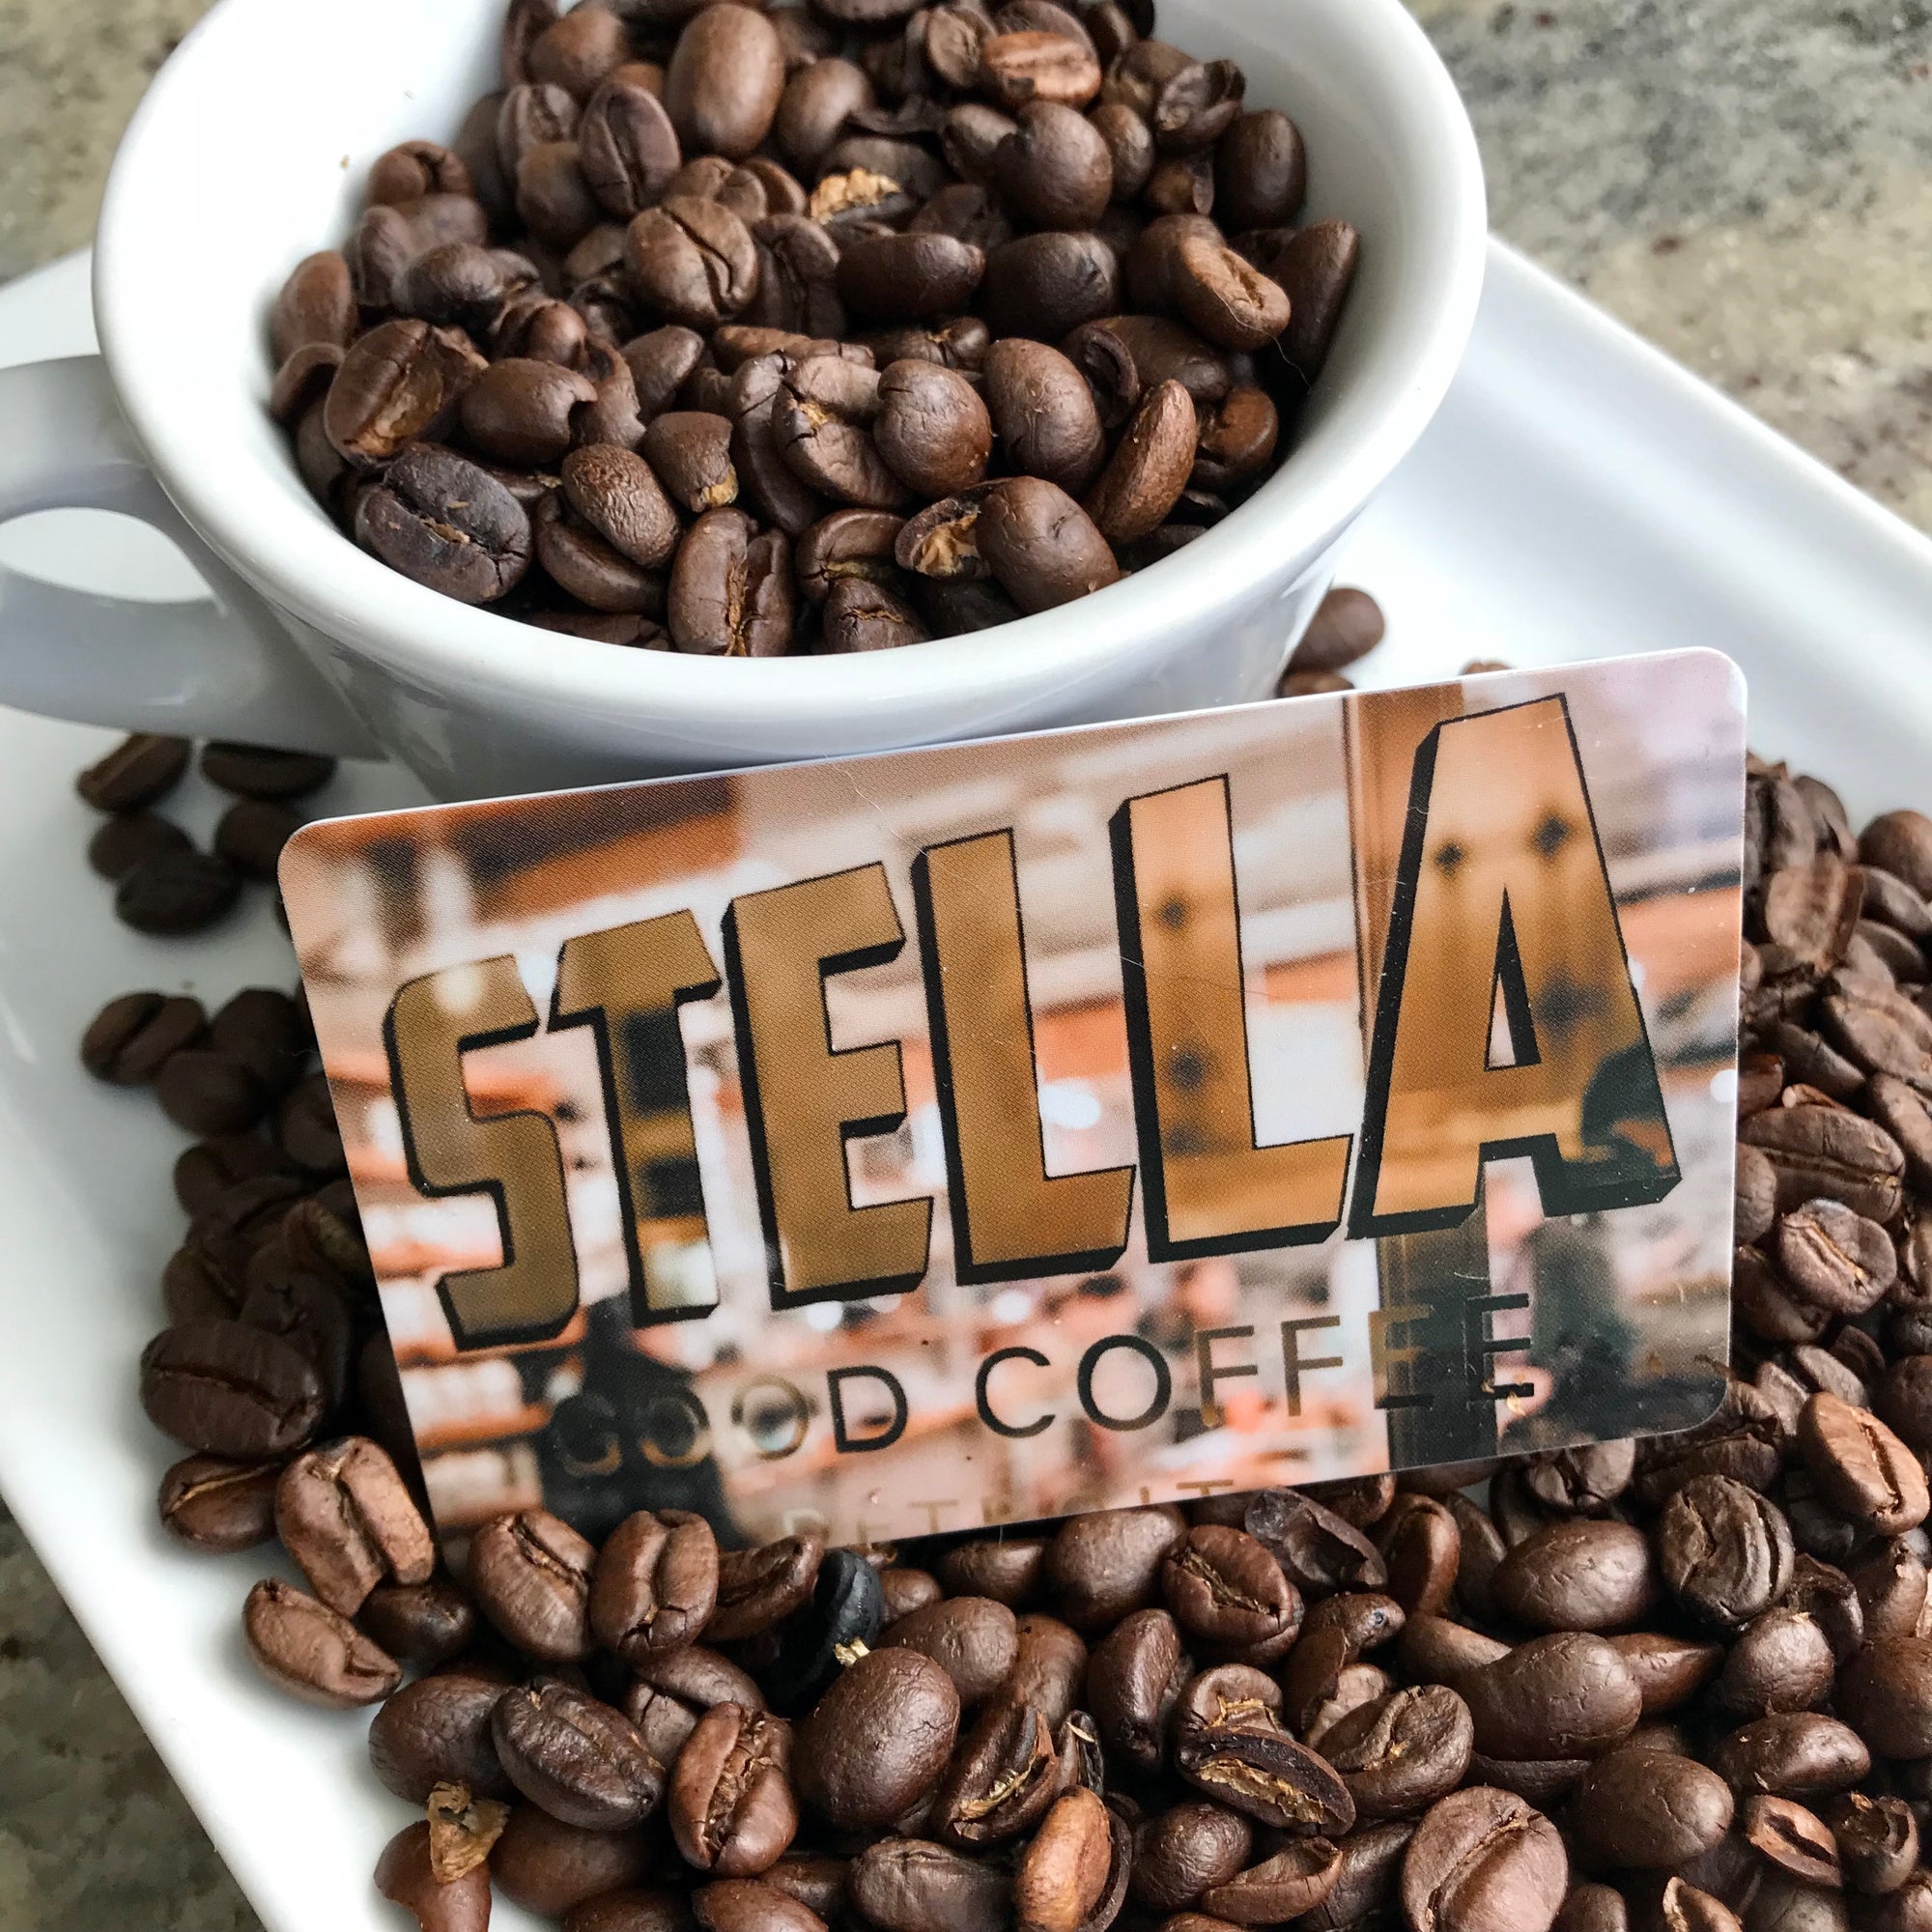 Stella Good Coffee Gift Card - $100    